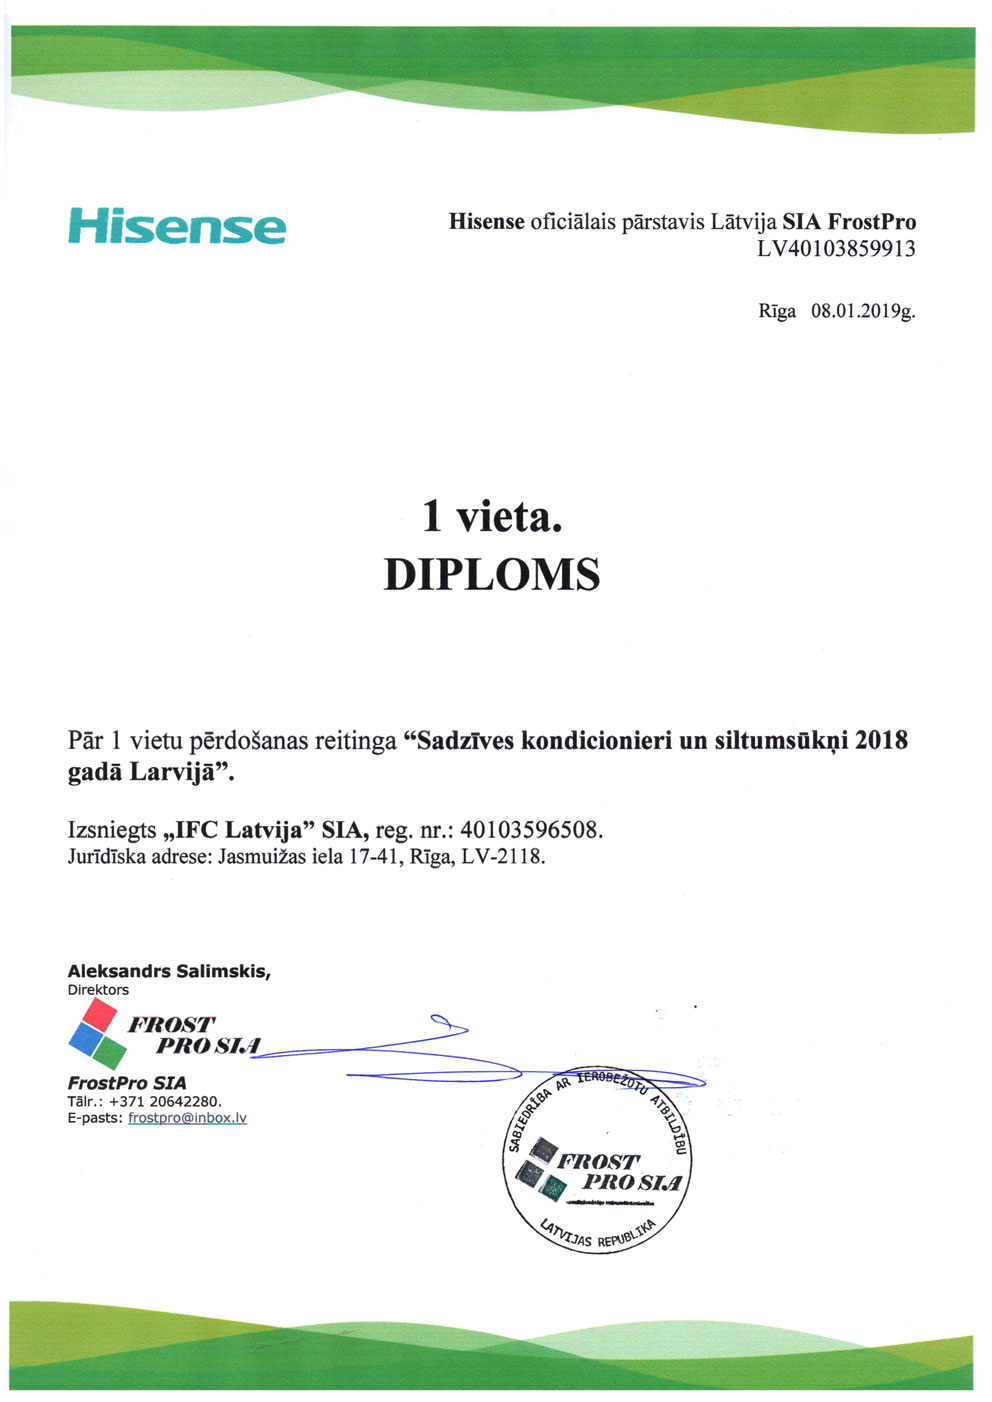 Hisense diplom 2018